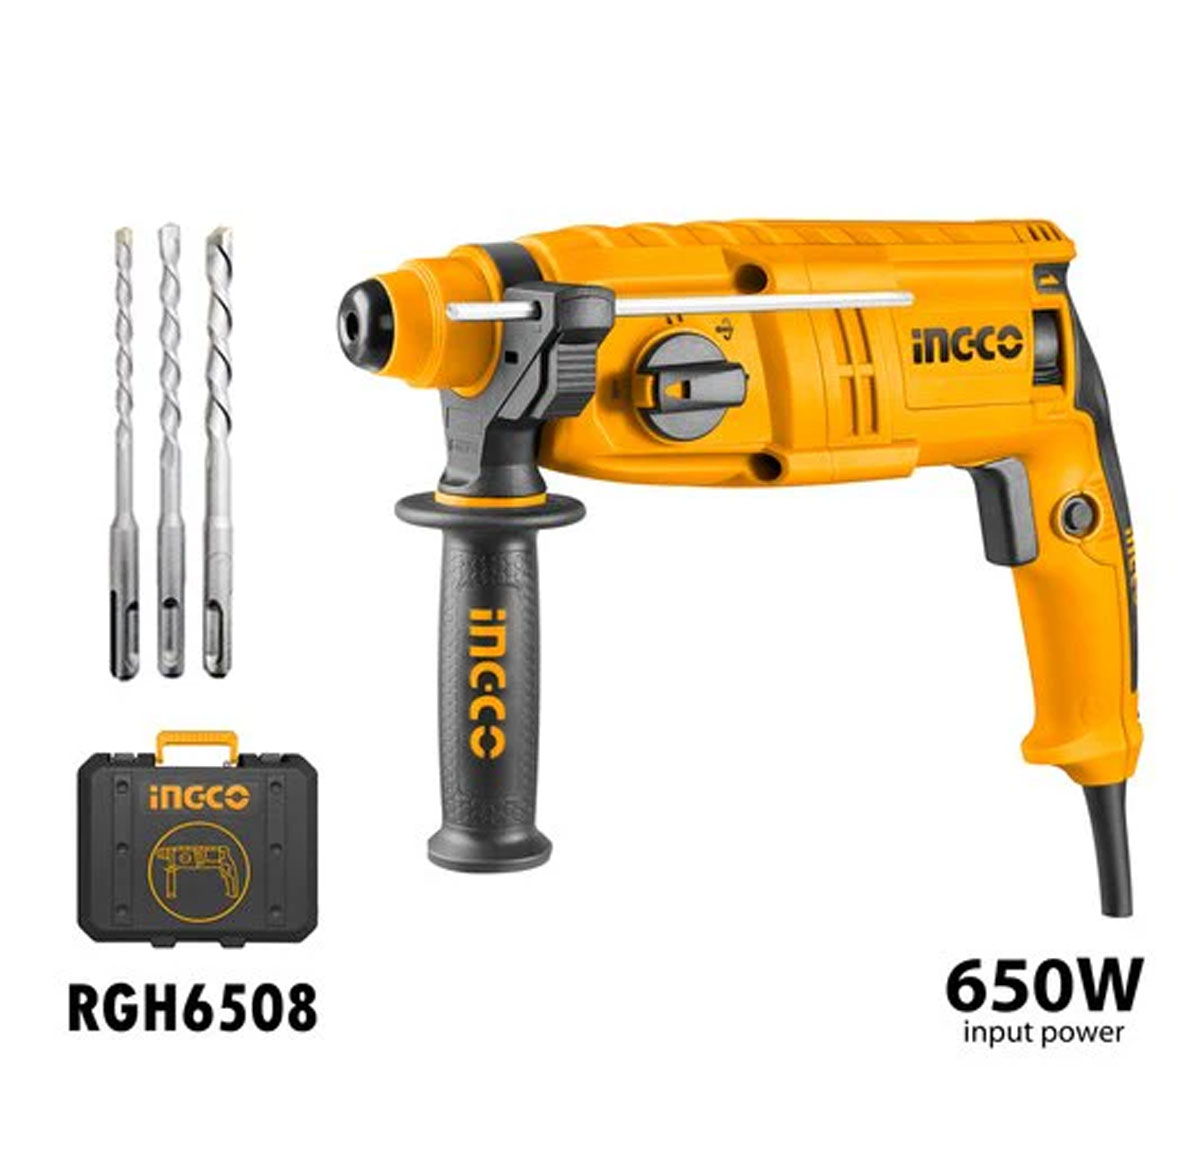 Ingco Rotary hammer 650W RGH6508